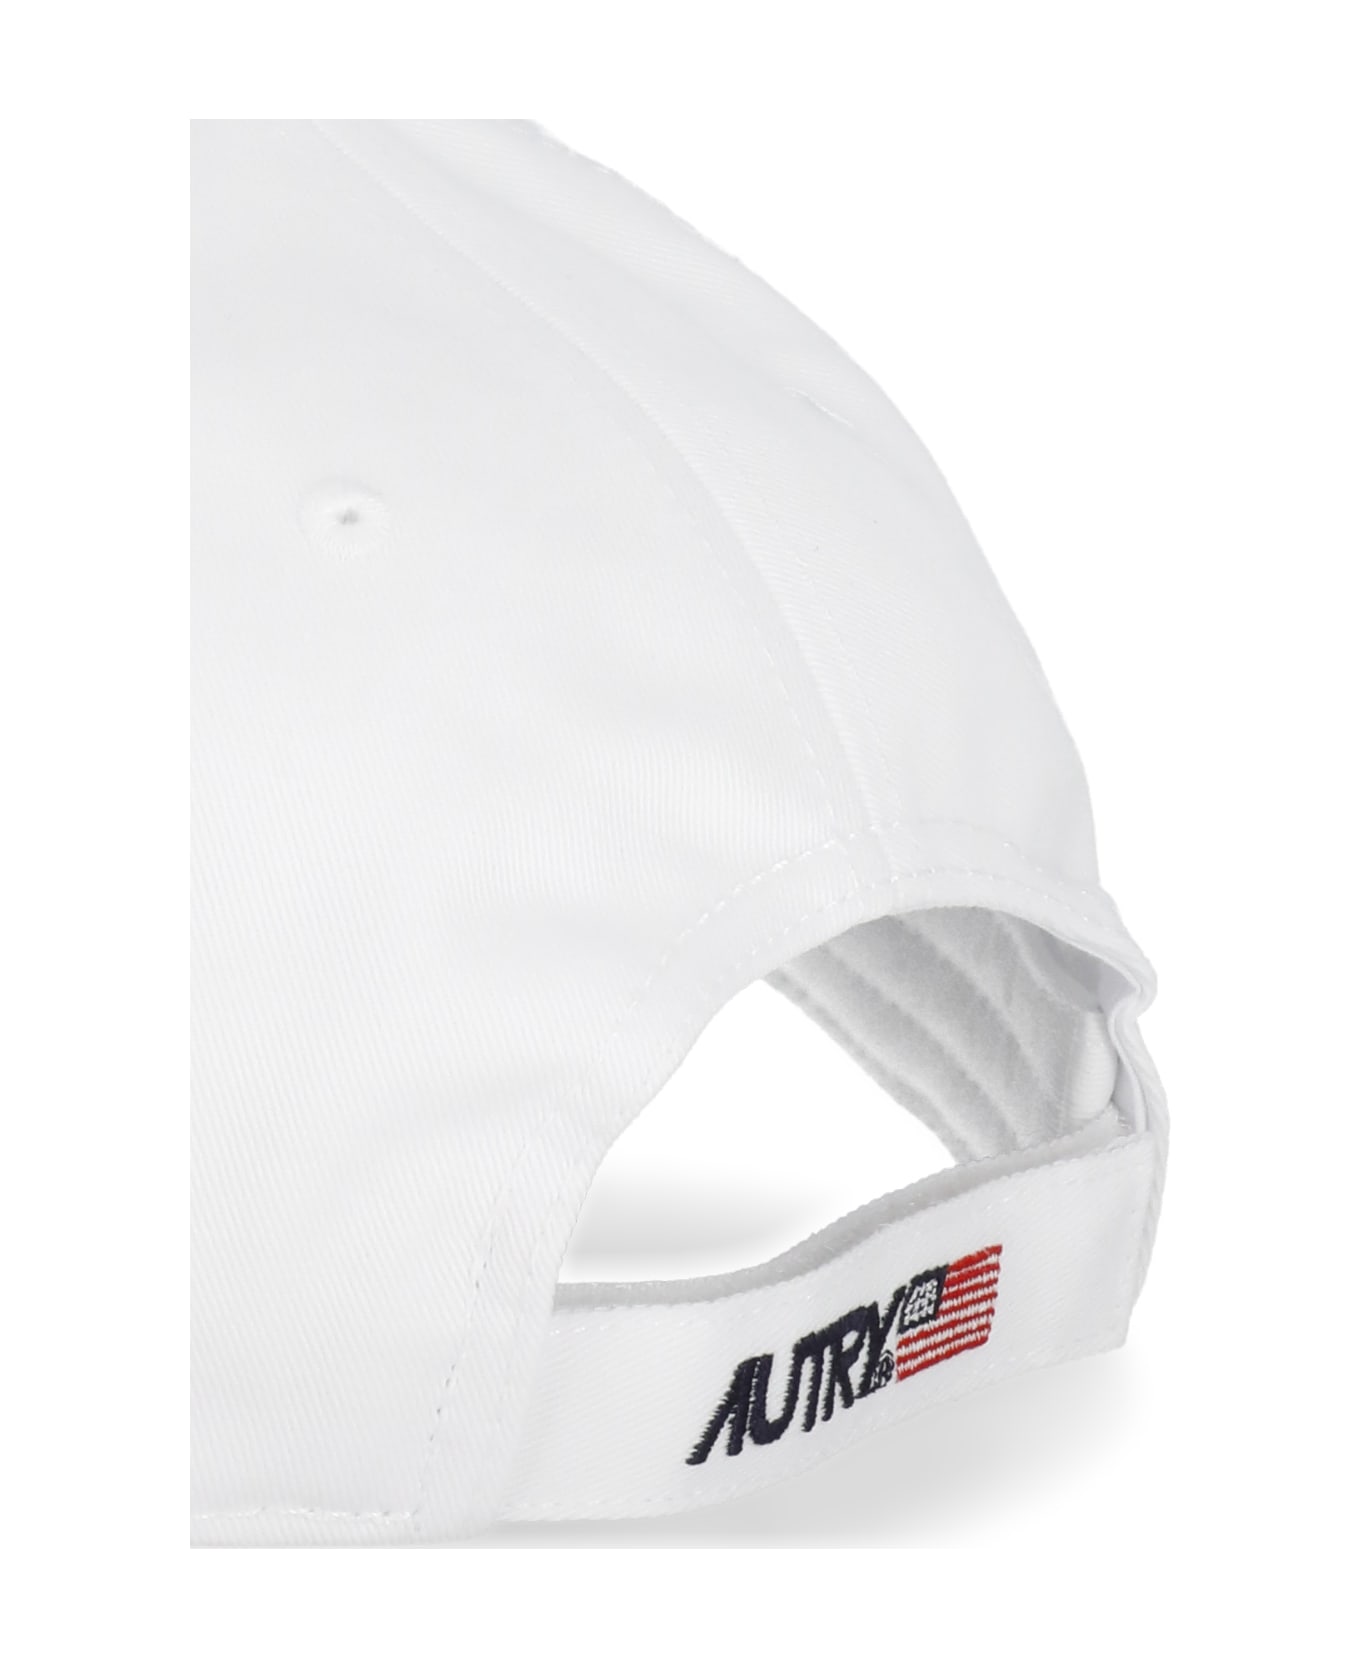 Autry Bob Lutz Baseball Hat - White